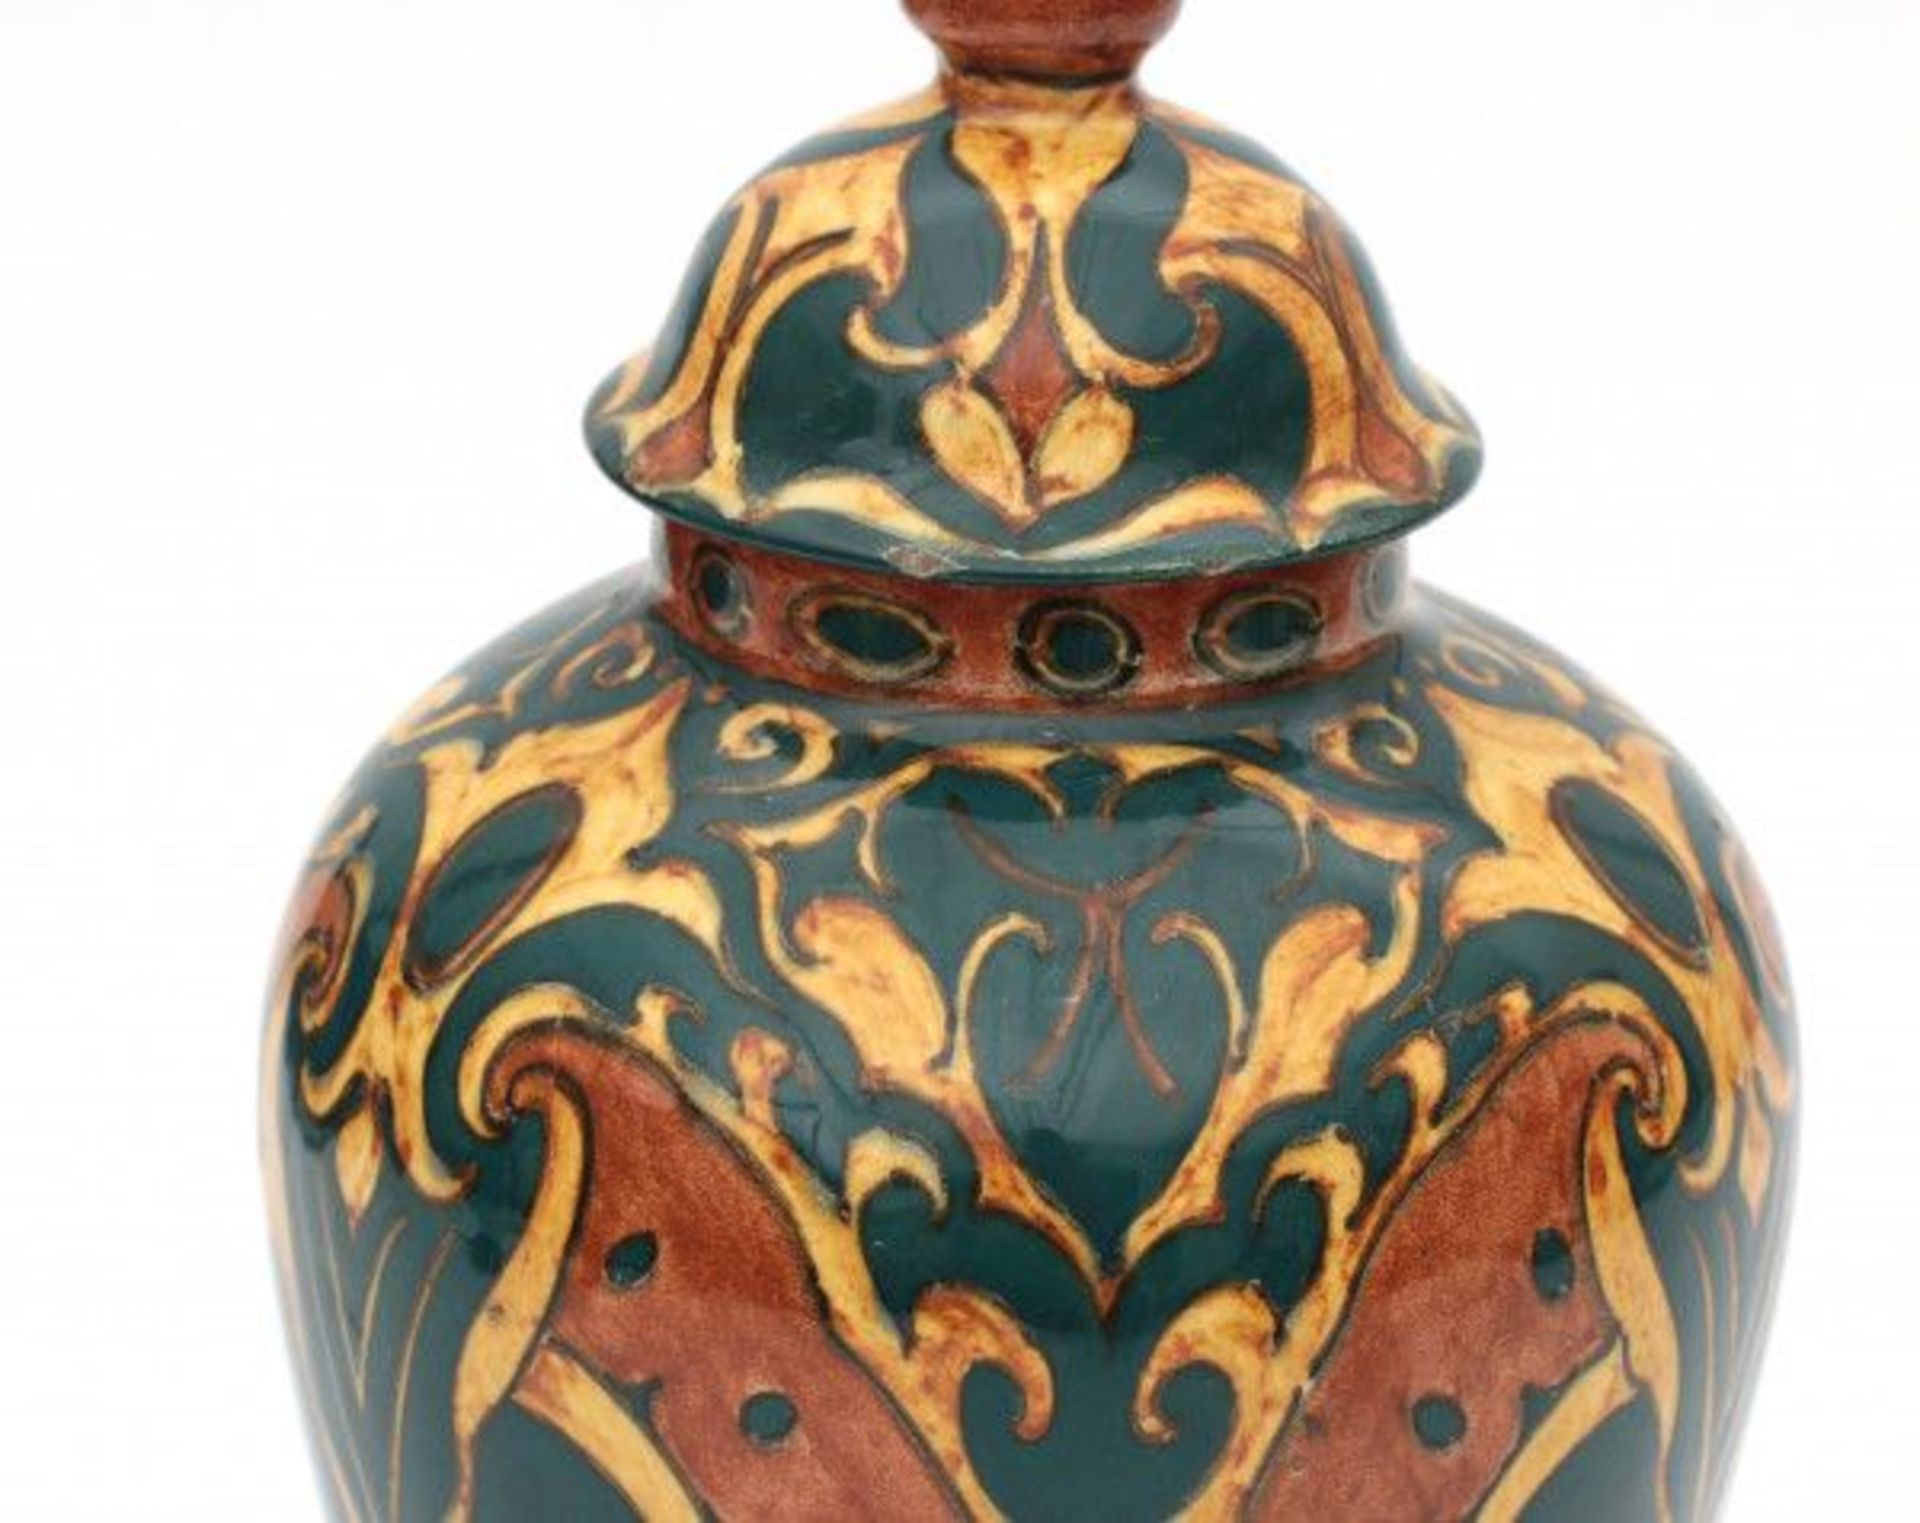 N.V. Haagsche Plateelfabriek Rozenburg, Den Haag (1883-1917)A ceramic vase and cover decorated with - Bild 3 aus 3